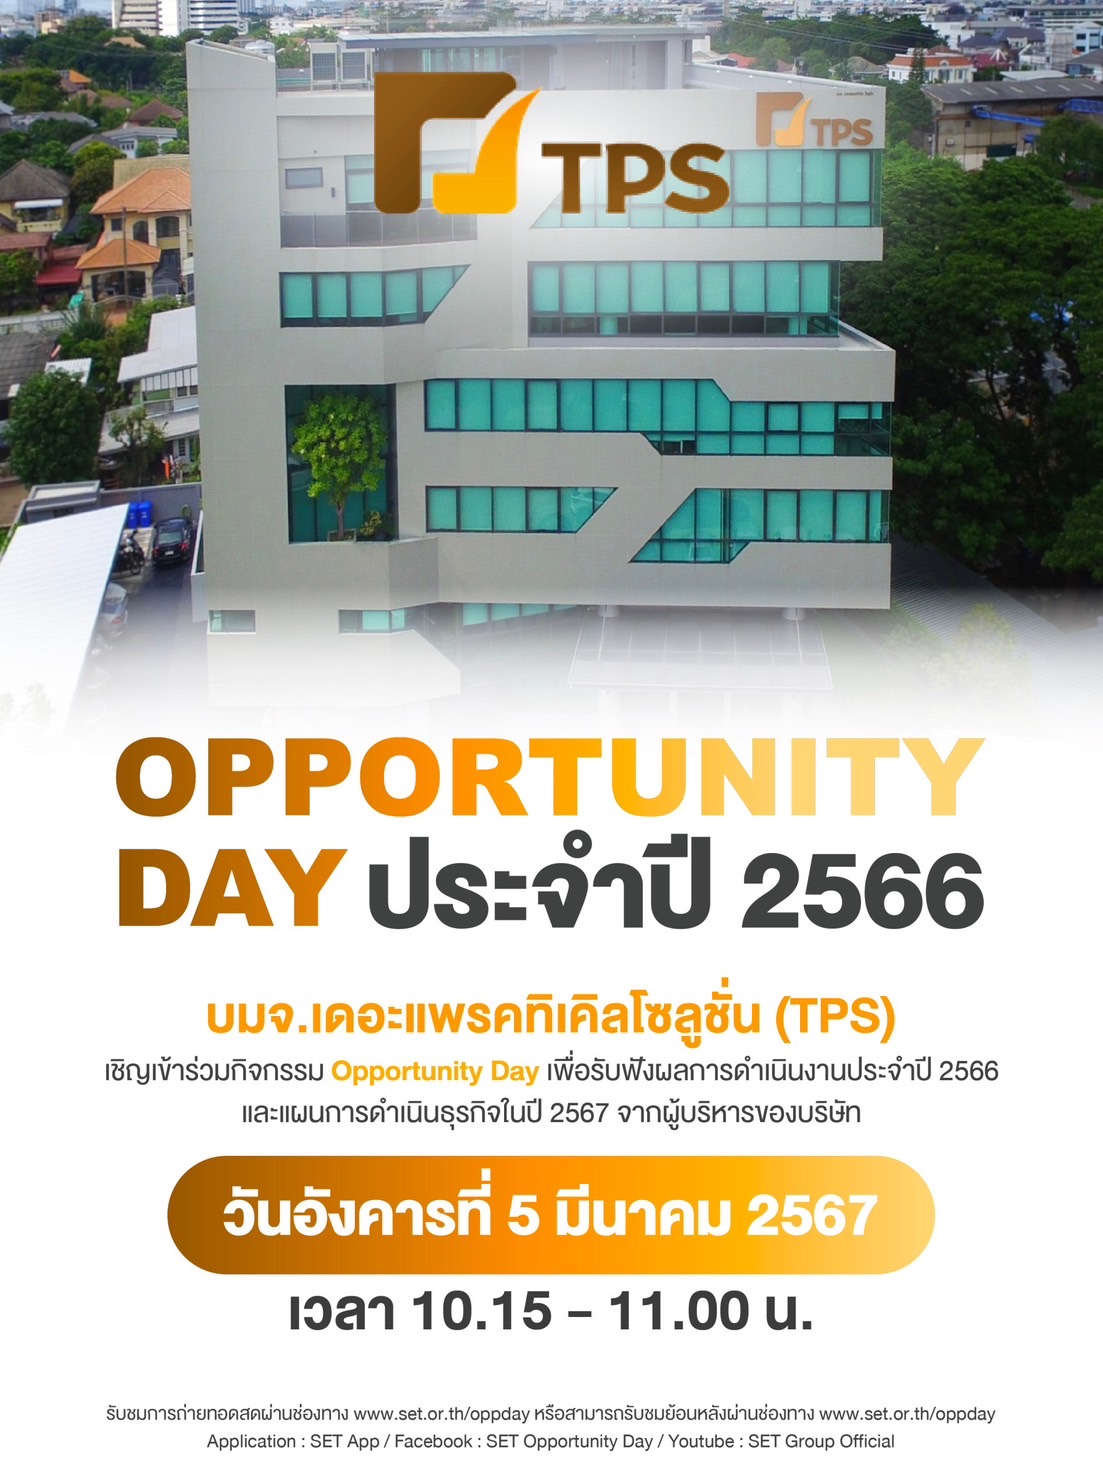 TPS ขอเชิญเข้าร่วมกิจกรรม Opportunity Day เพื่อรับฟังผลการดำเนินงานประจำปี 2566 และ แผนการดำเนินธุรกิจในปี 2567